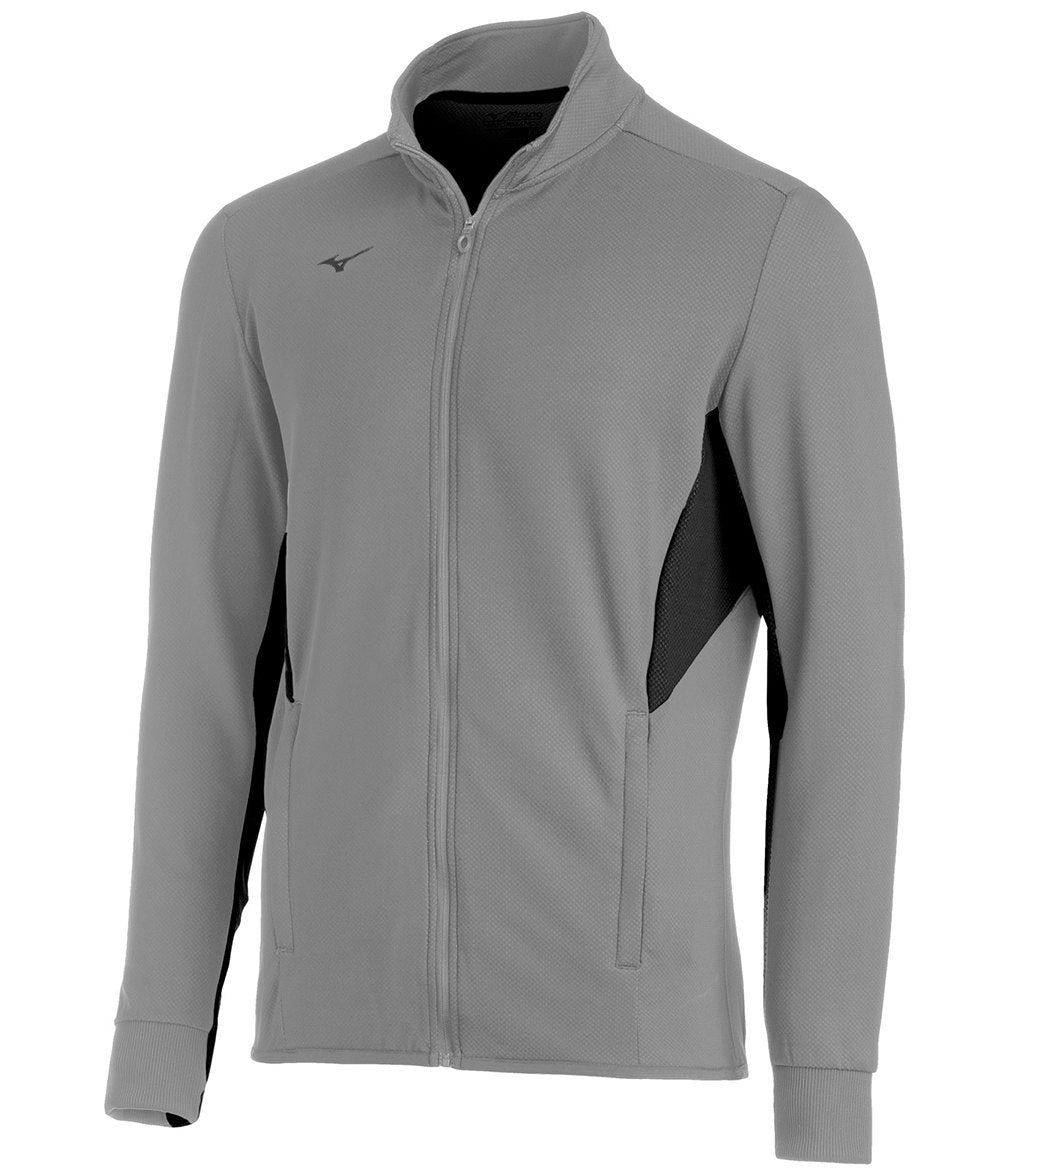 Mizuno Men's Elite Training Jacket - Grey-Black Large Grey/Black Cotton/Polyester - Swimoutlet.com